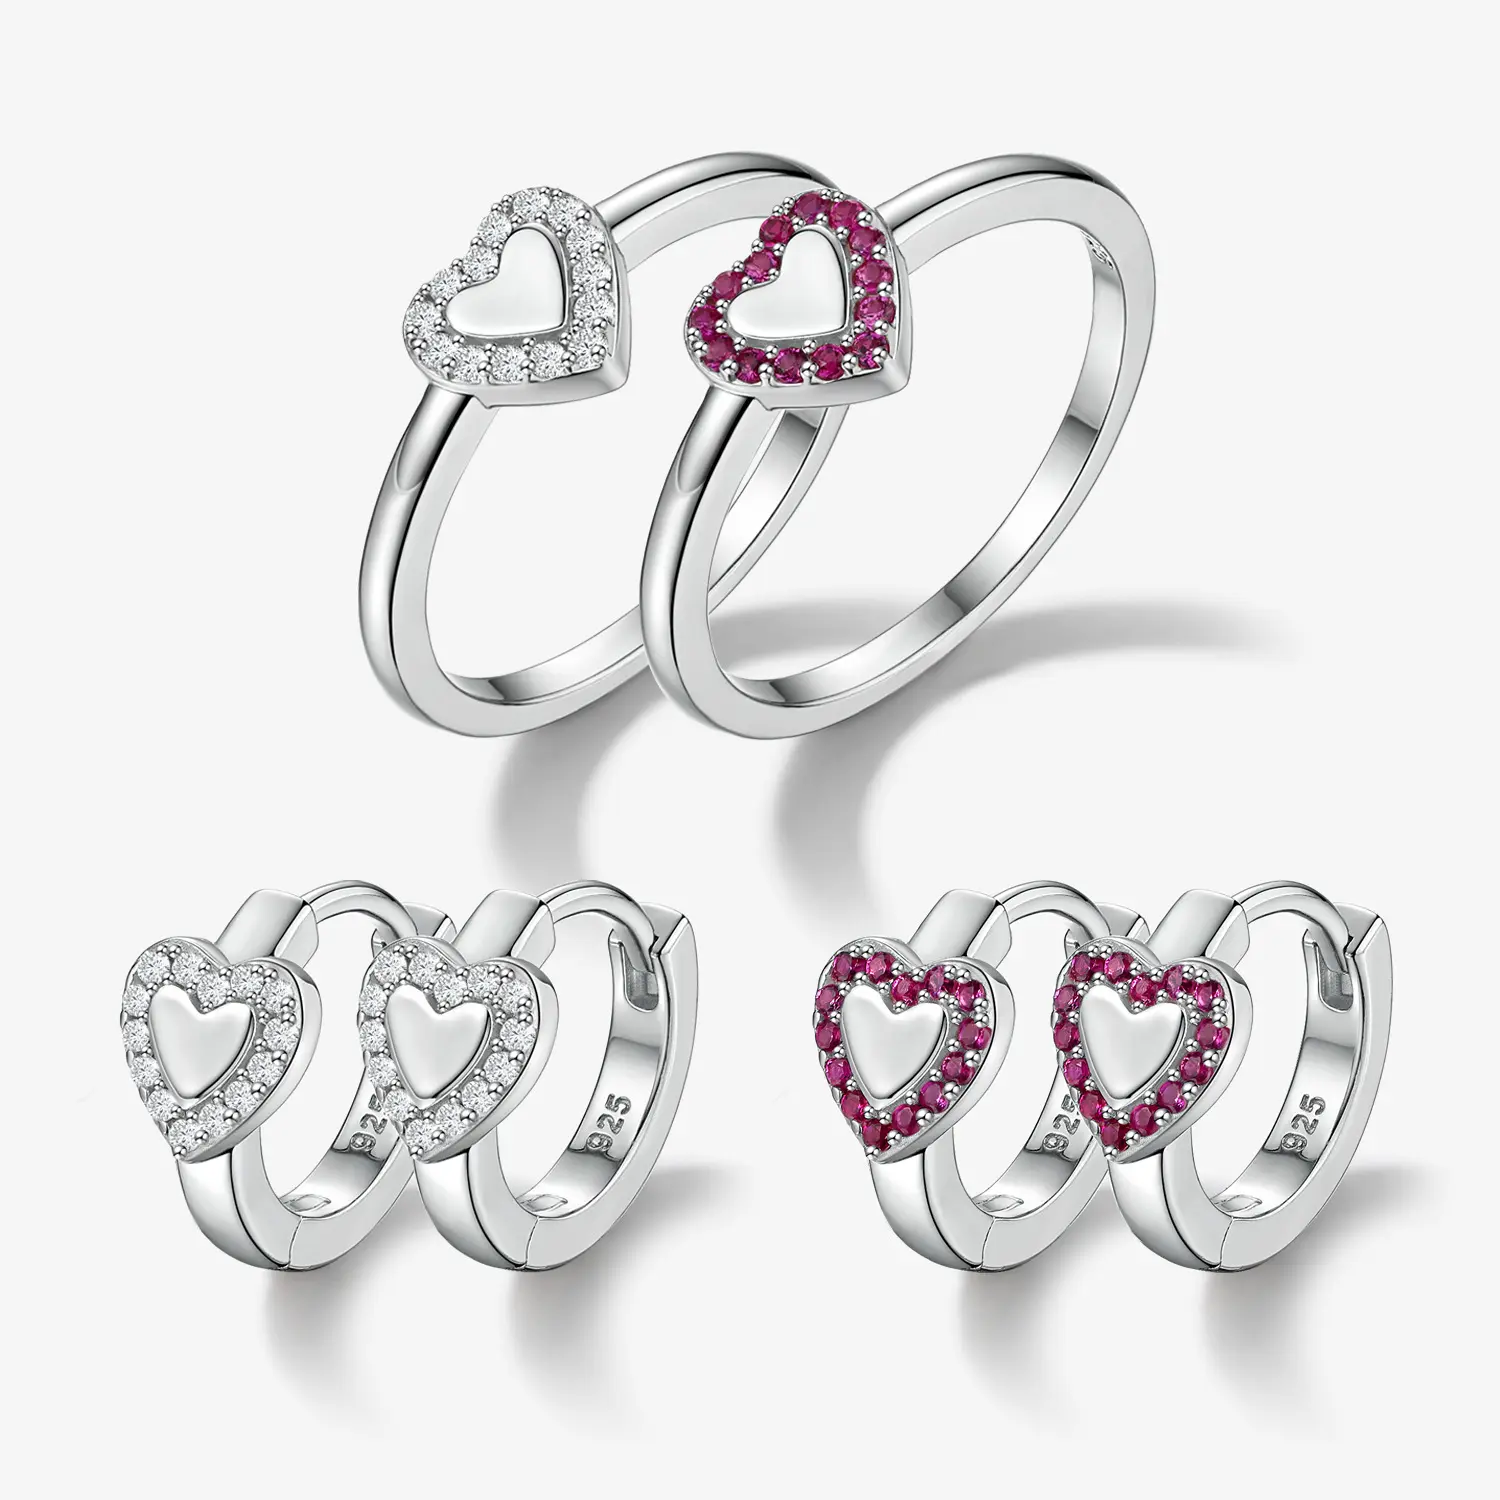 Mujeres moda plata 925 pequeños pendientes de aro circón amor corazón pendientes corazón anillo joyería fina s925 anillo pendiente conjunto